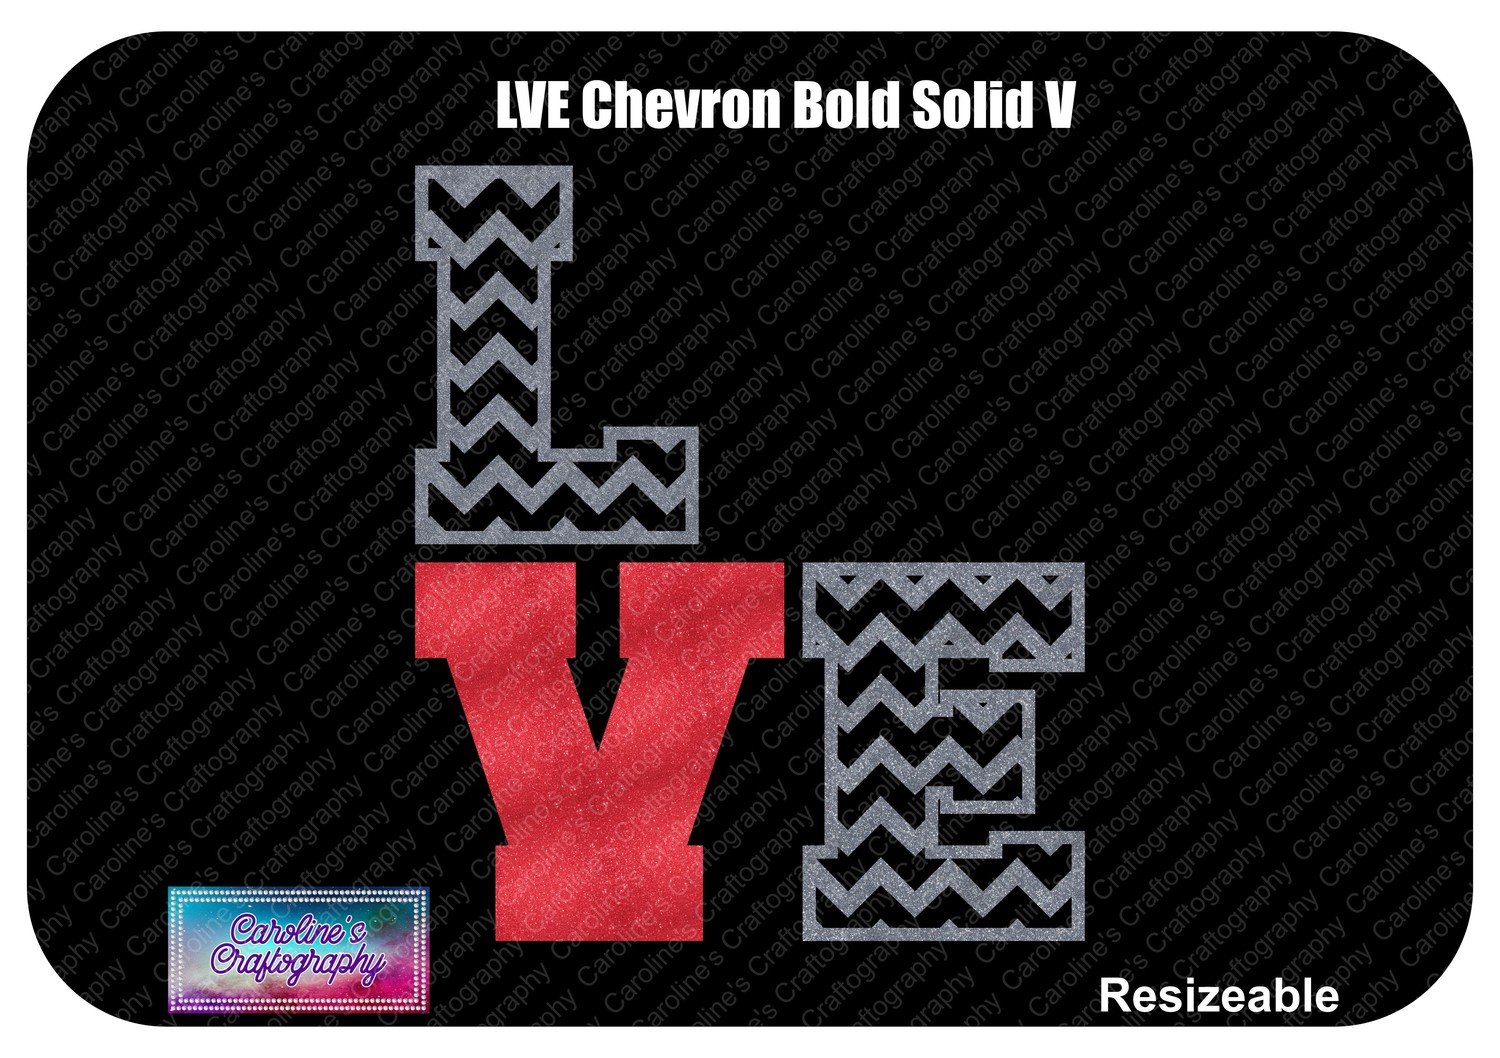 Chevron LVE Bold Solid V Vinyl